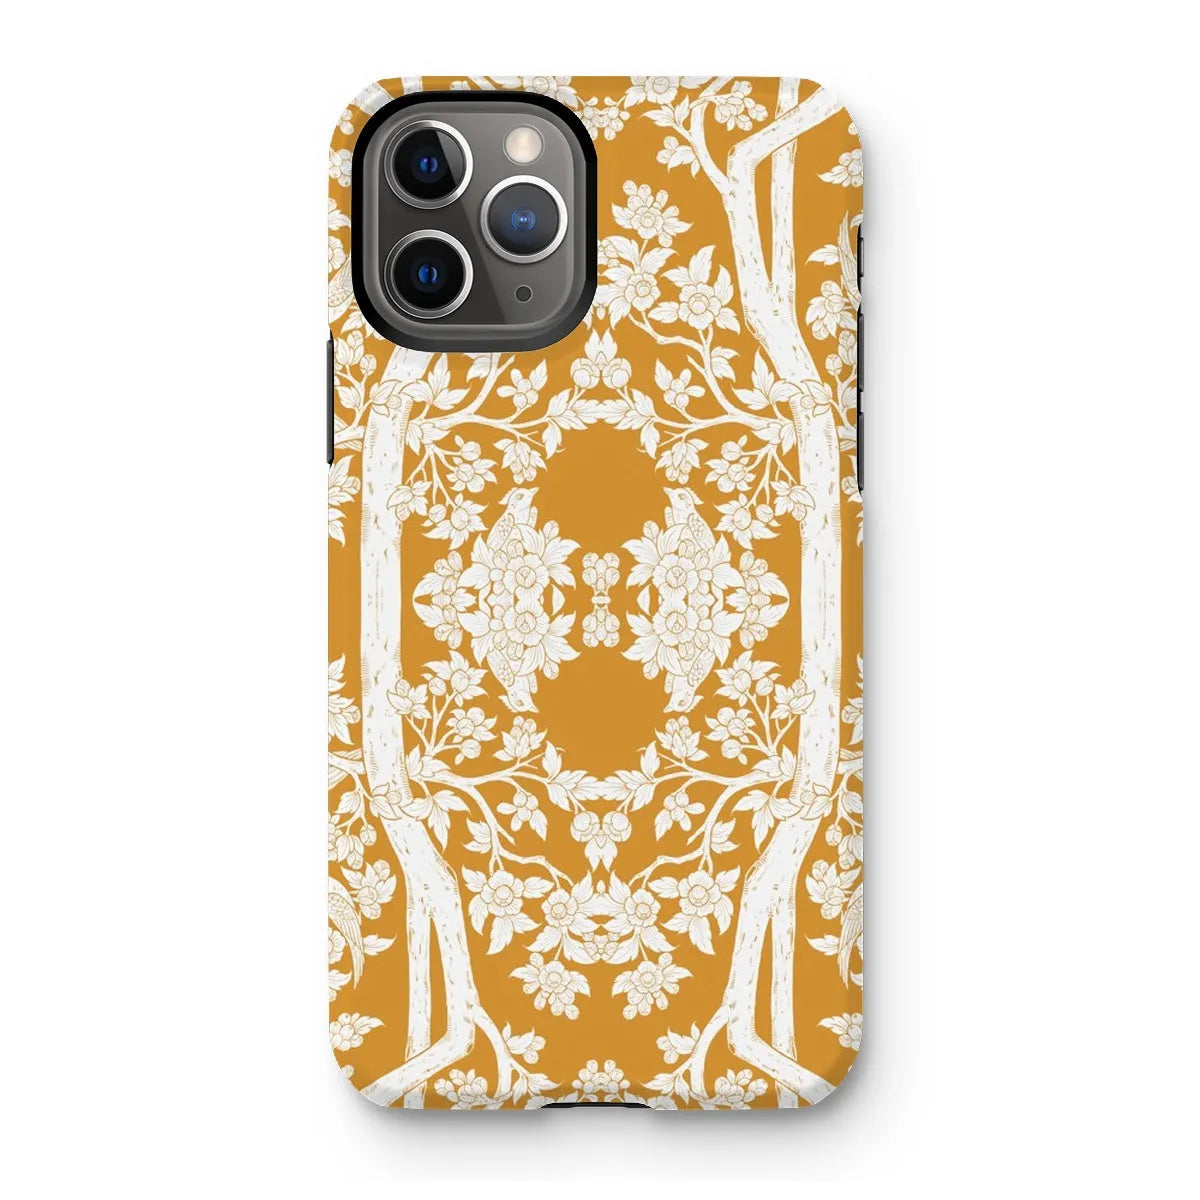 Aviary Orange Aesthetic Pattern Art Phone Case - Iphone 11 Pro / Matte - Mobile Phone Cases - Aesthetic Art